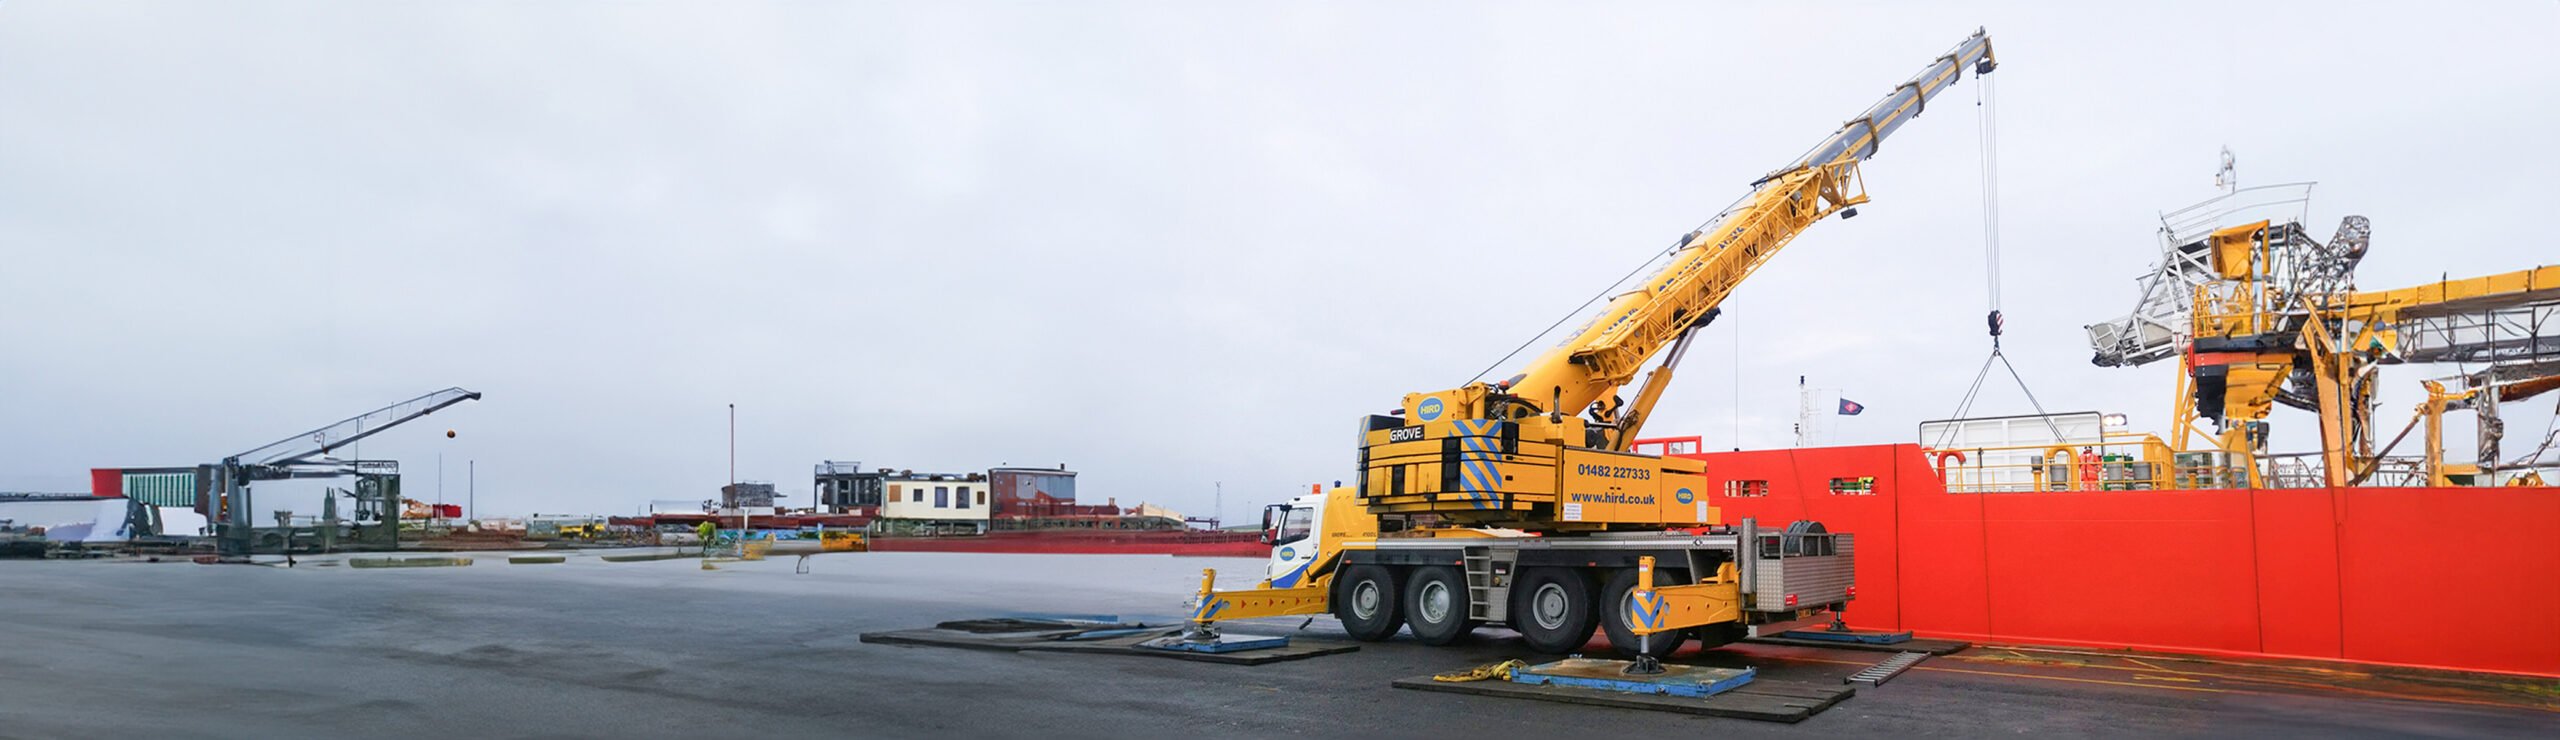 crane lift dockyard machinery moving services scaled